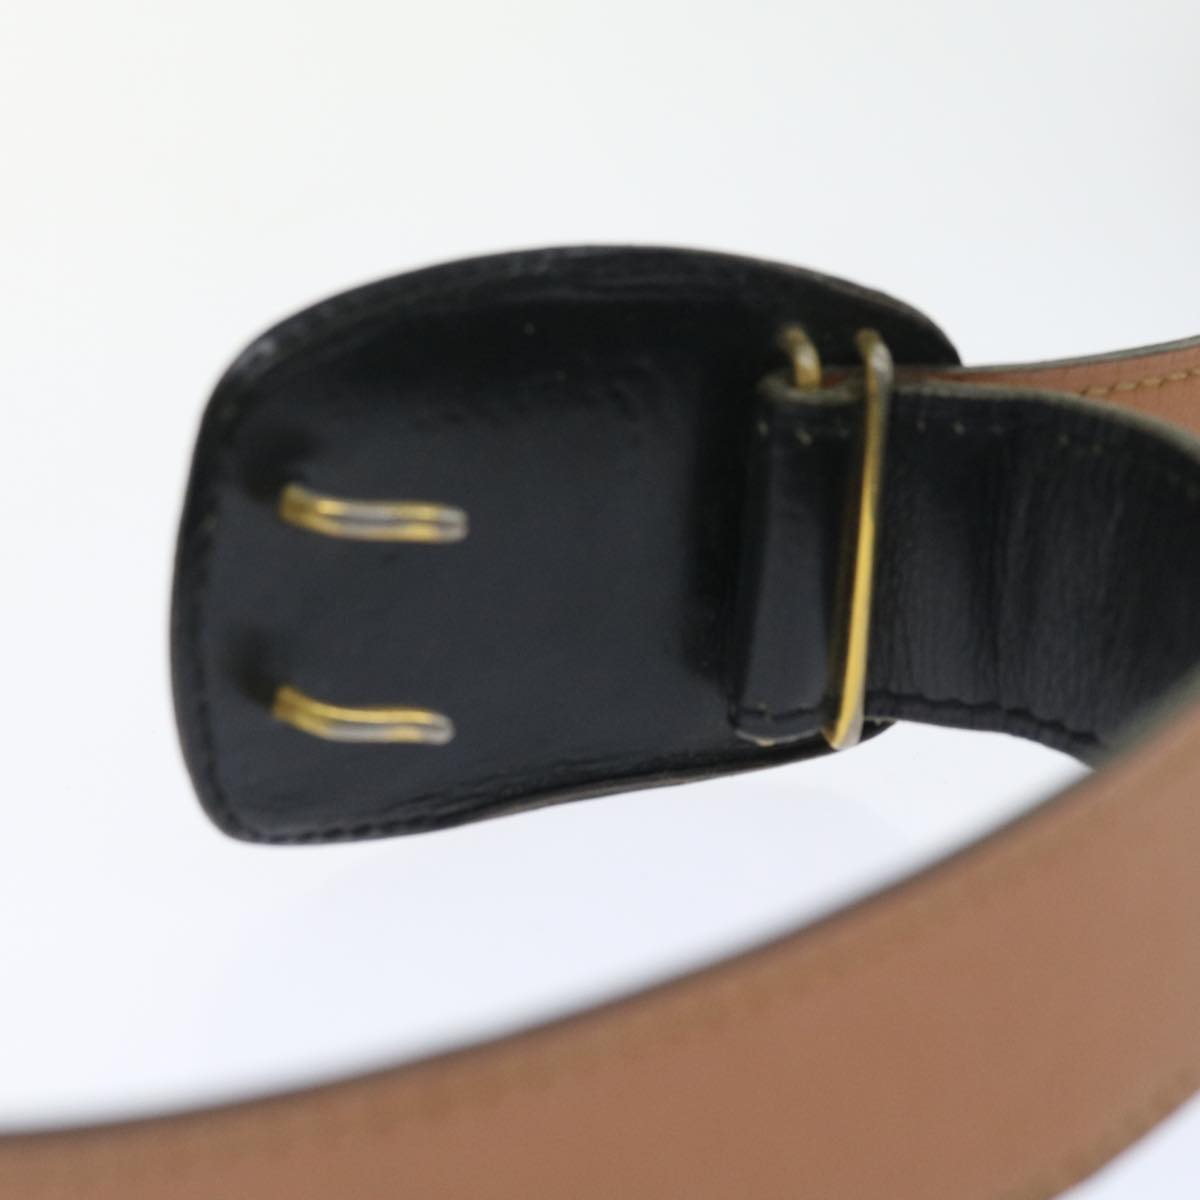 HERMES Belt Leather 33.5"" Black Gold Auth ar10364B